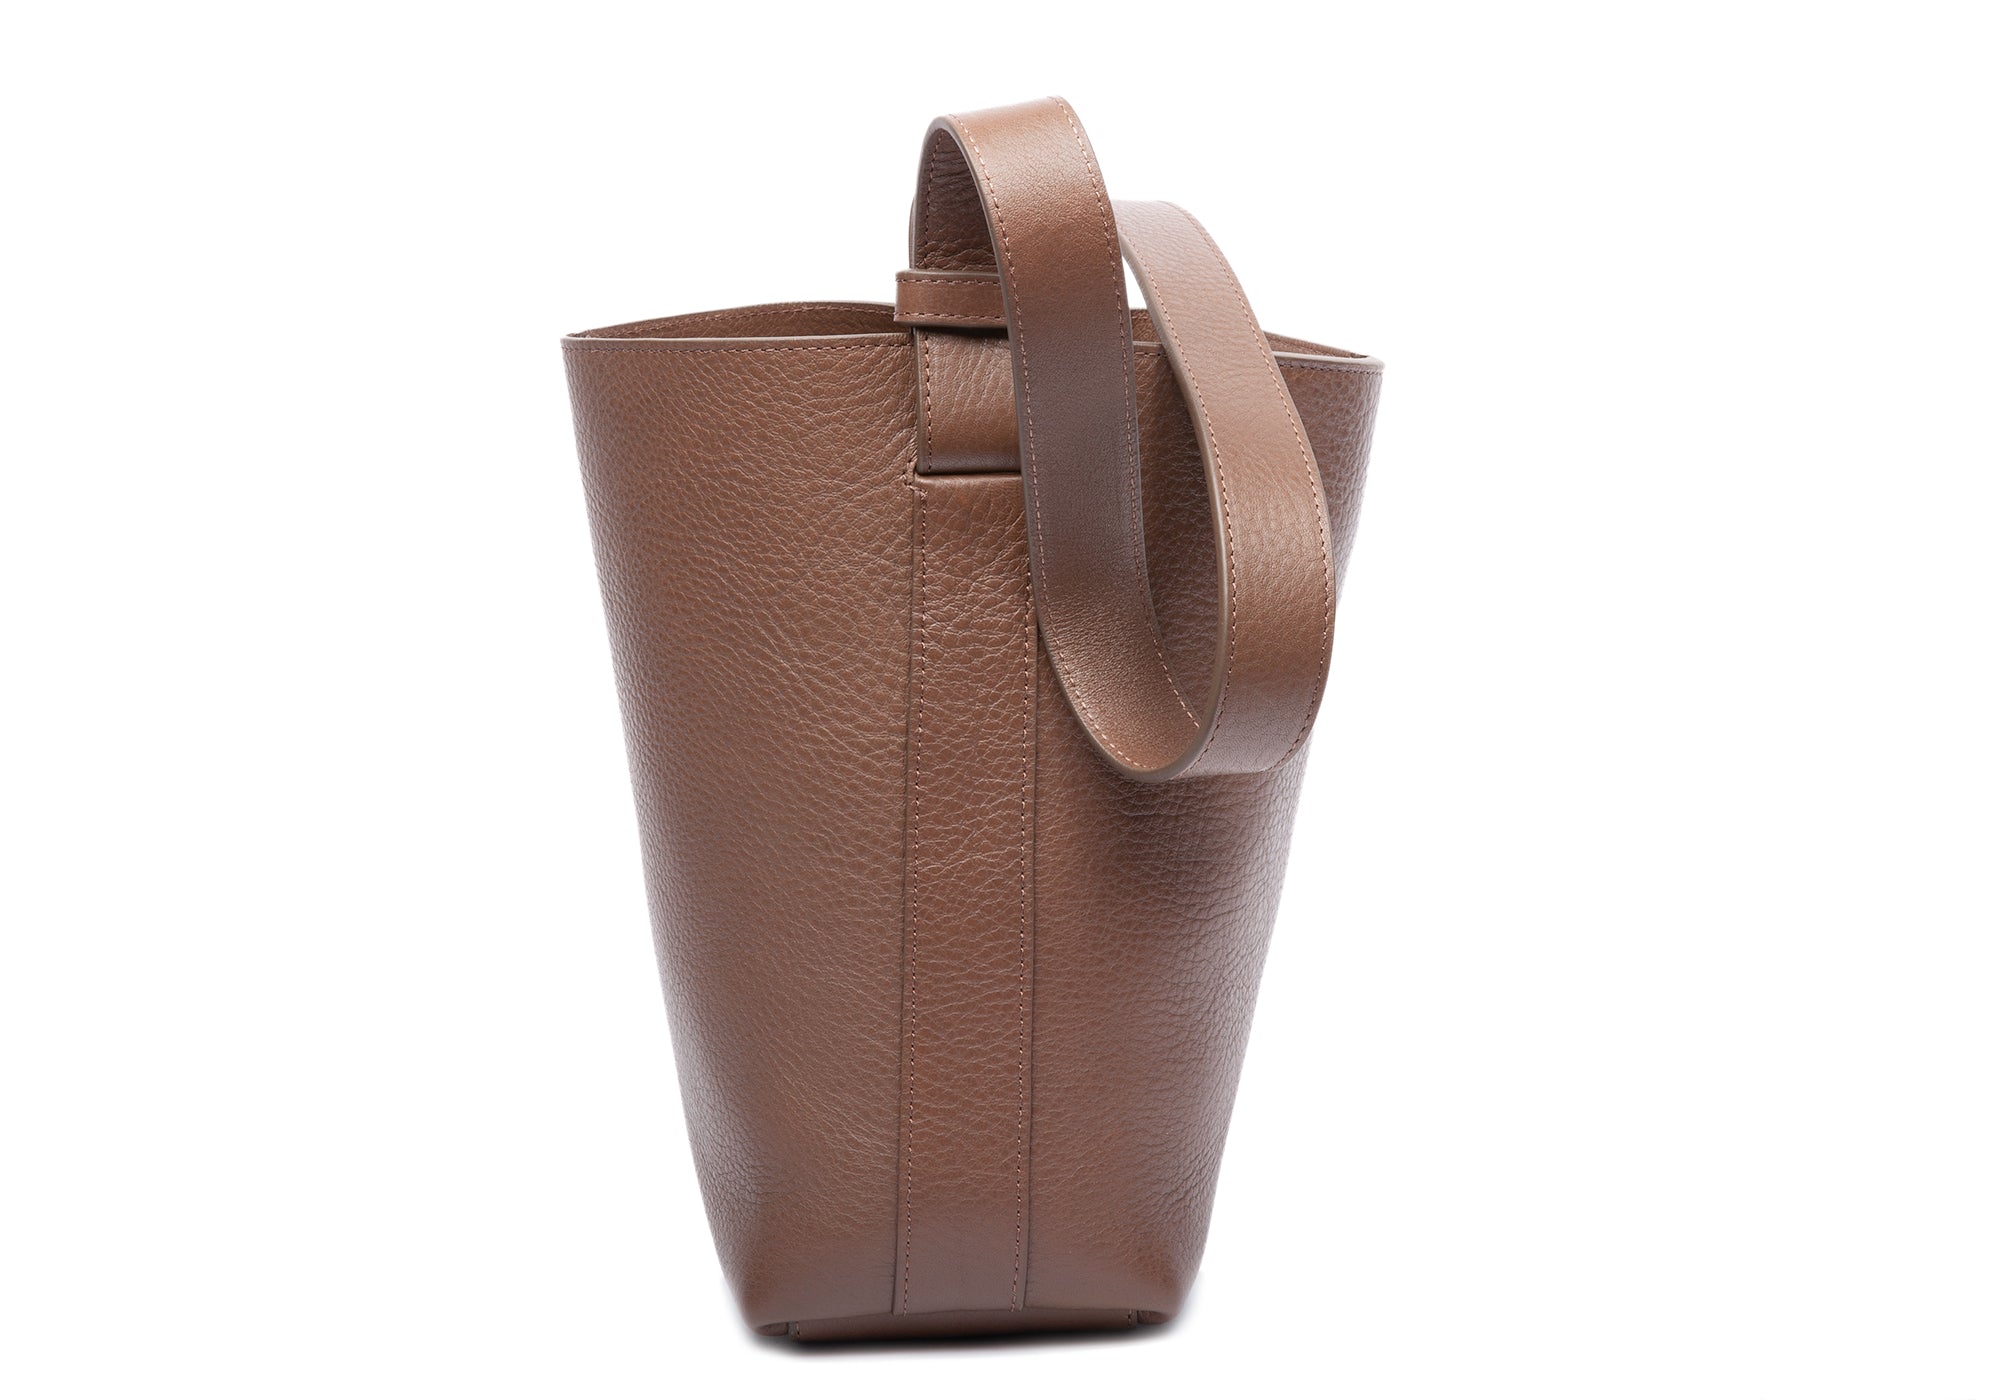 Longchamp 'épure' Mini Bucket Bag